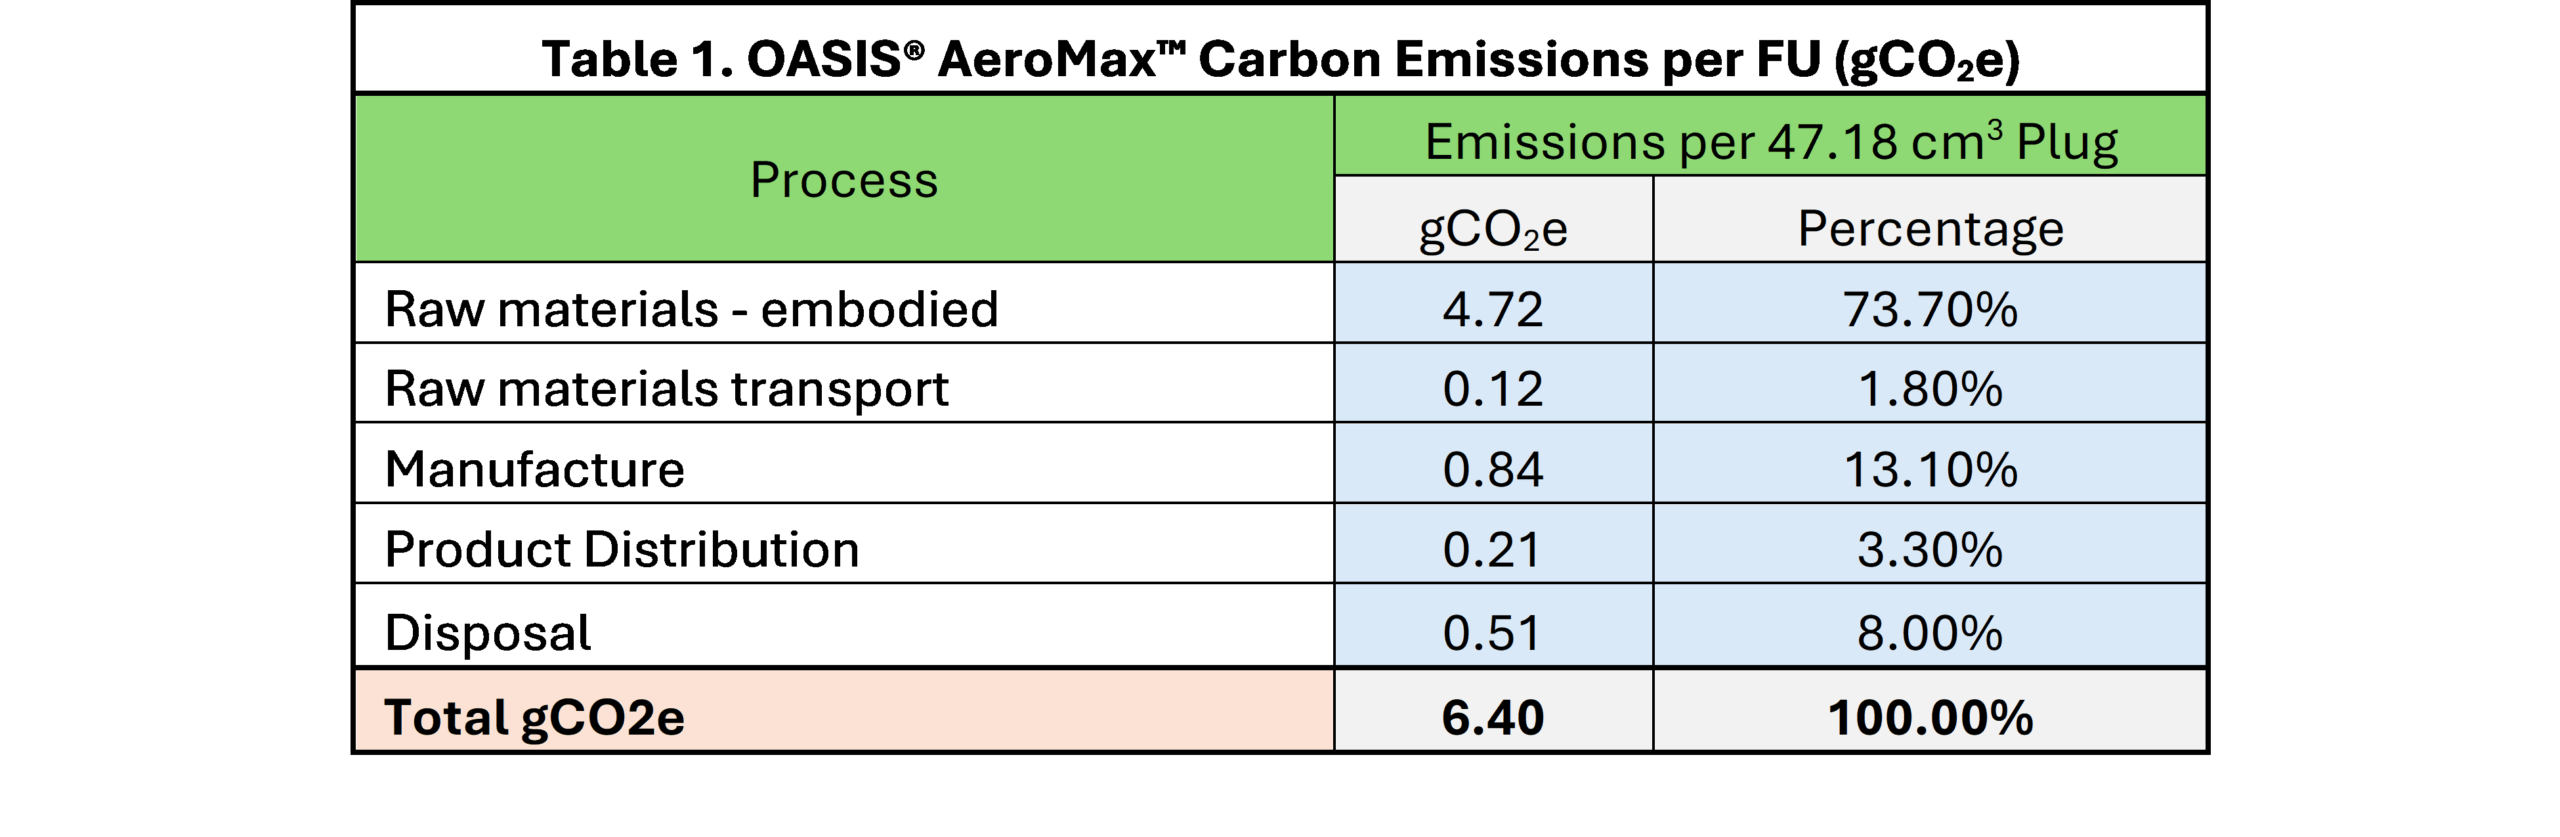 Oasis AeroMax Carbon emissions per EU table